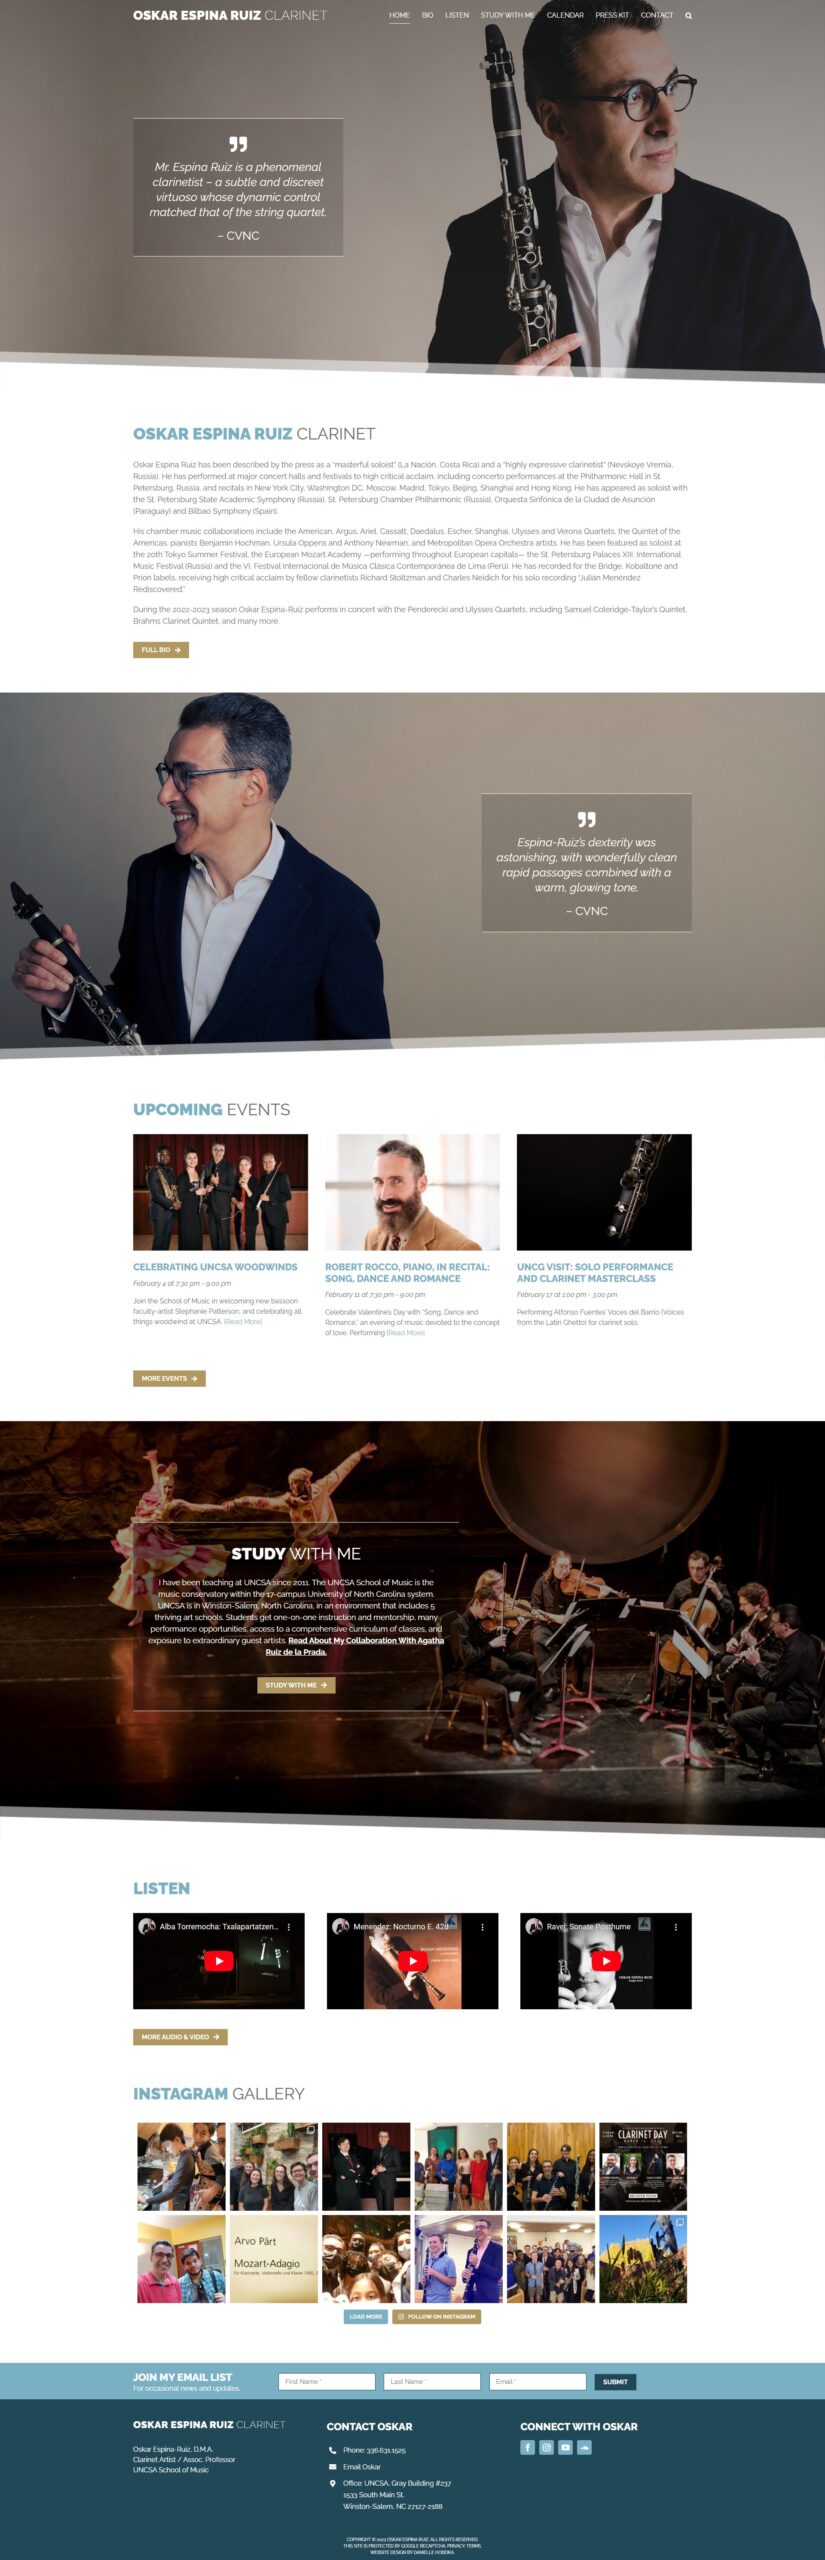 Web Design for Oskar Espina Ruiz, Clarinet